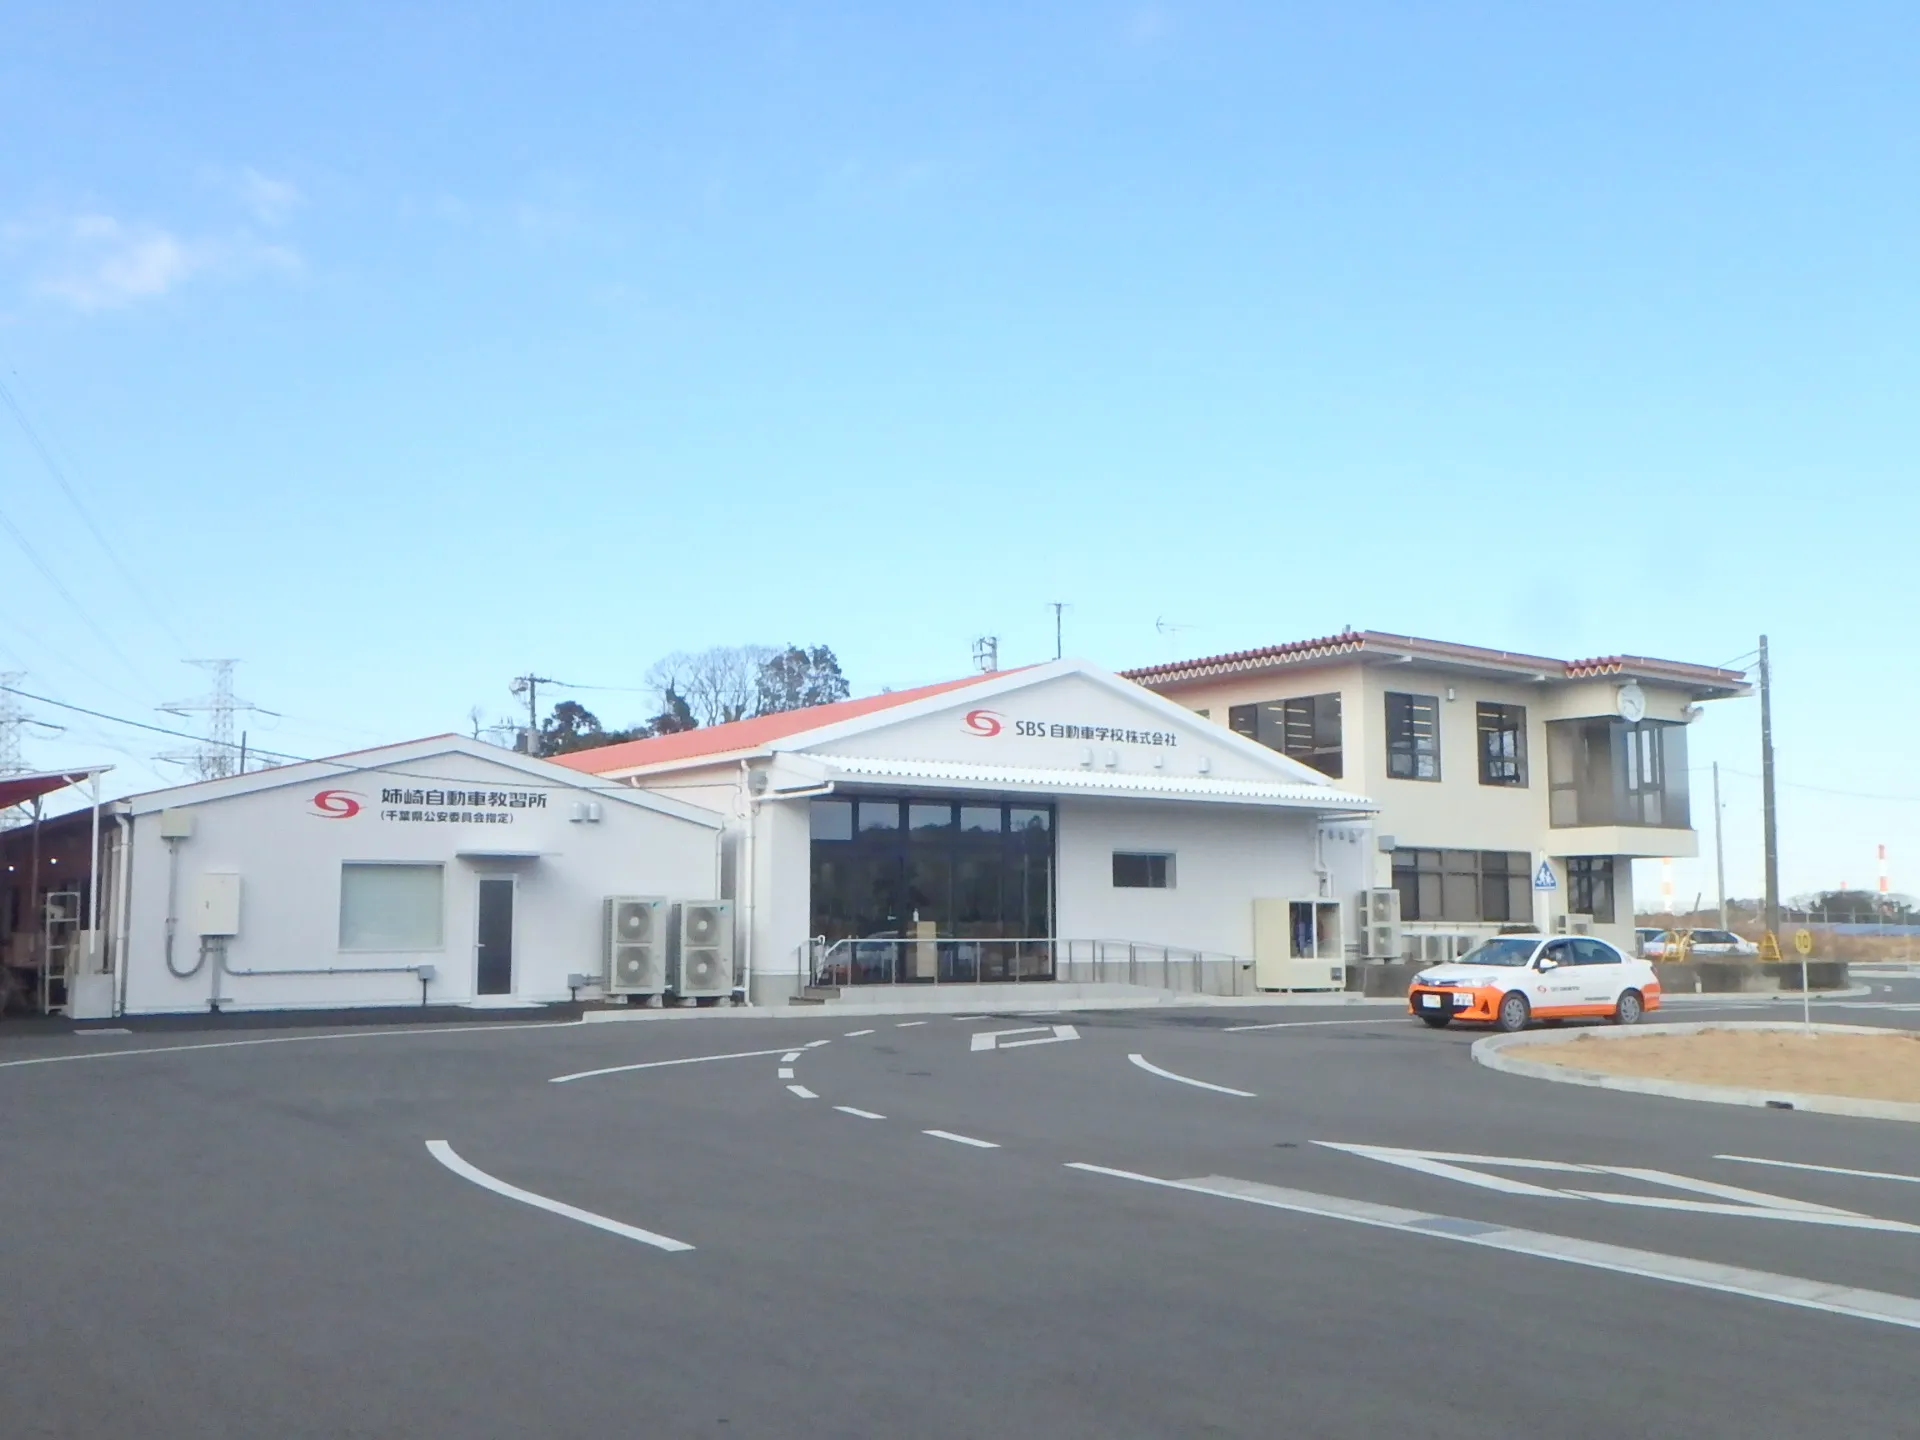 SBS自動車学校姉崎自動車教習所改修工事のサムネイル画像です